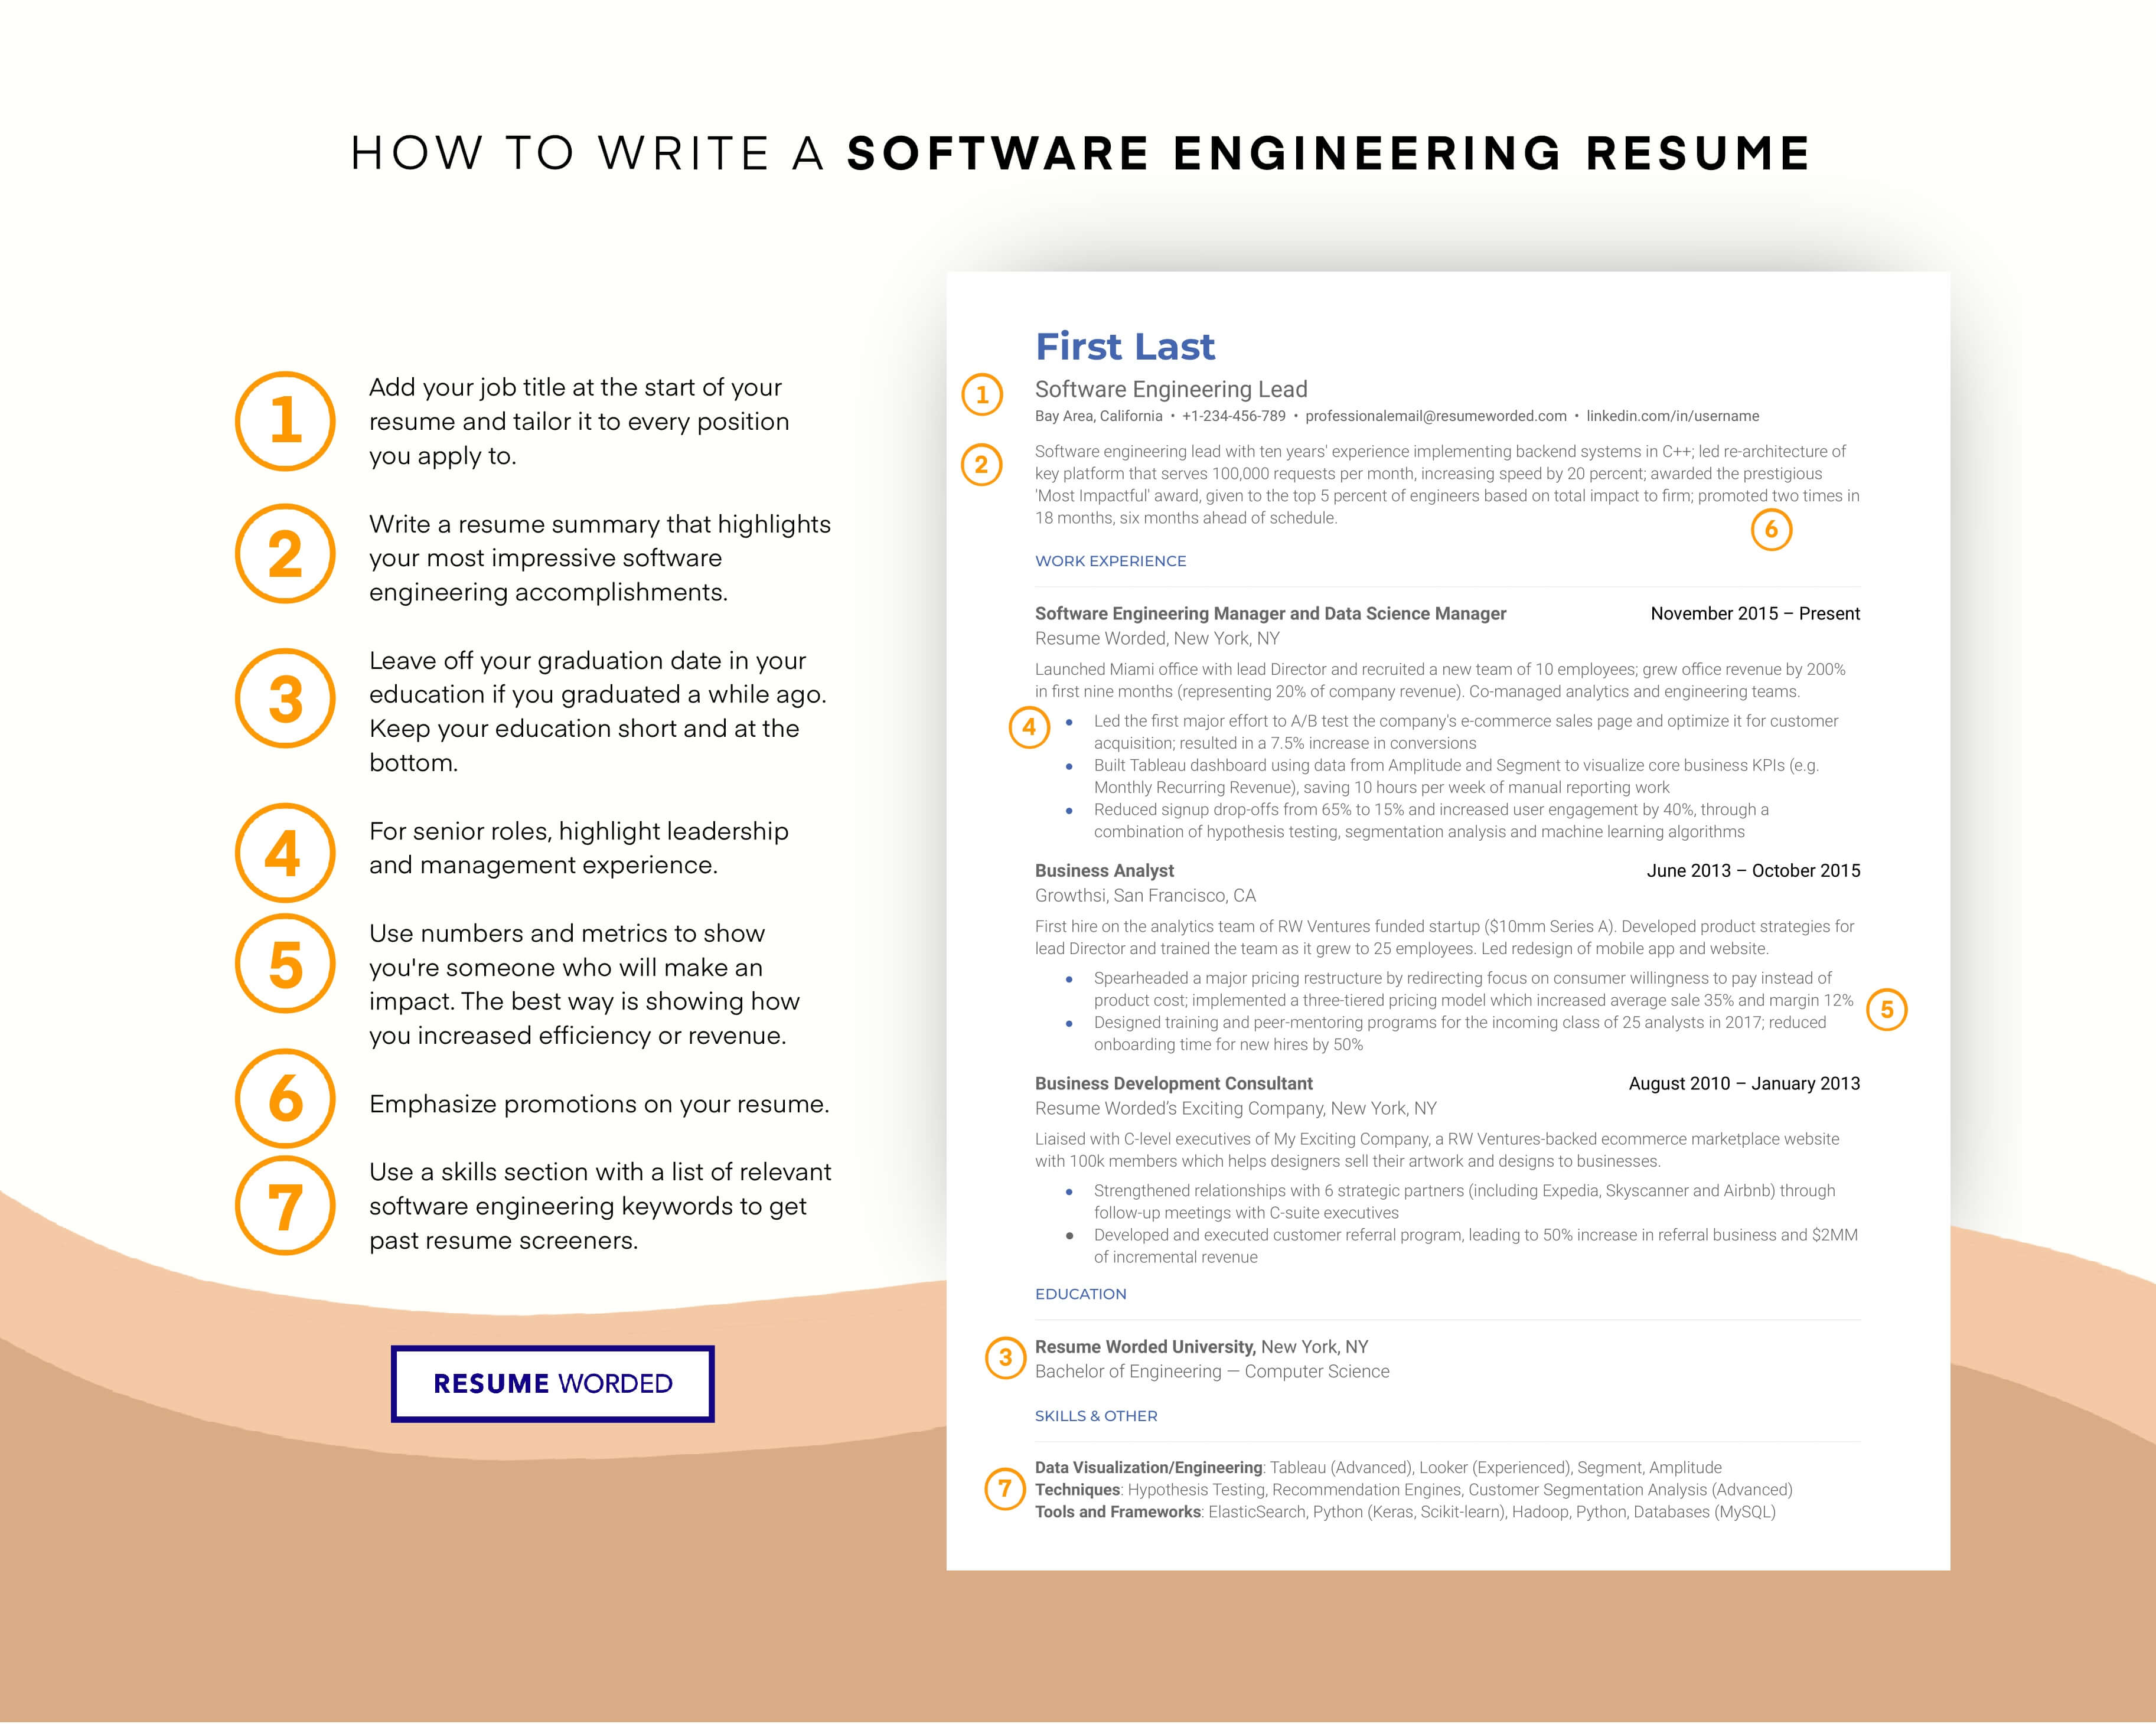 Show your software proficiency - Senior Civil Engineer CV